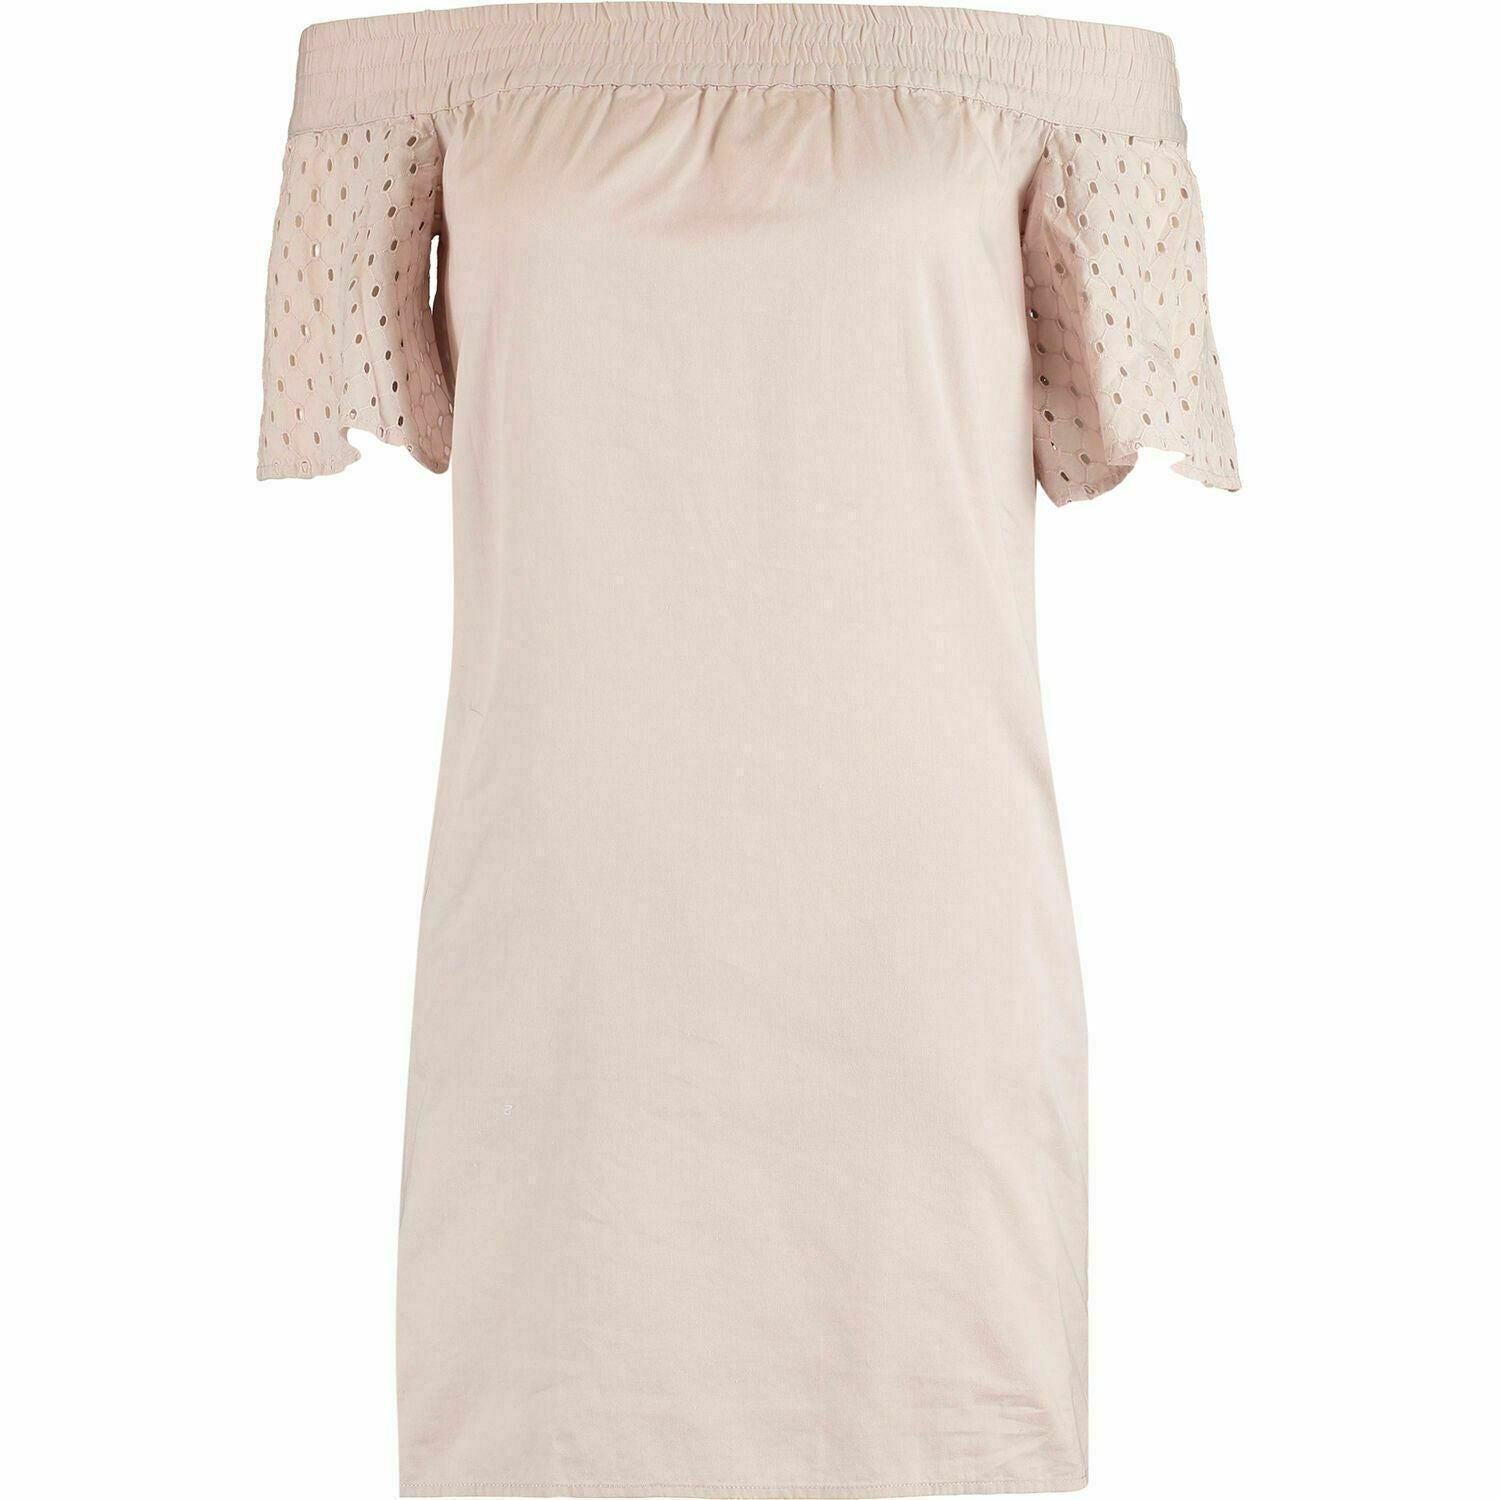 ALLSAINTS Women's LIVIA Bardot Neckline Dress, Champagne Pink, size S / UK 10